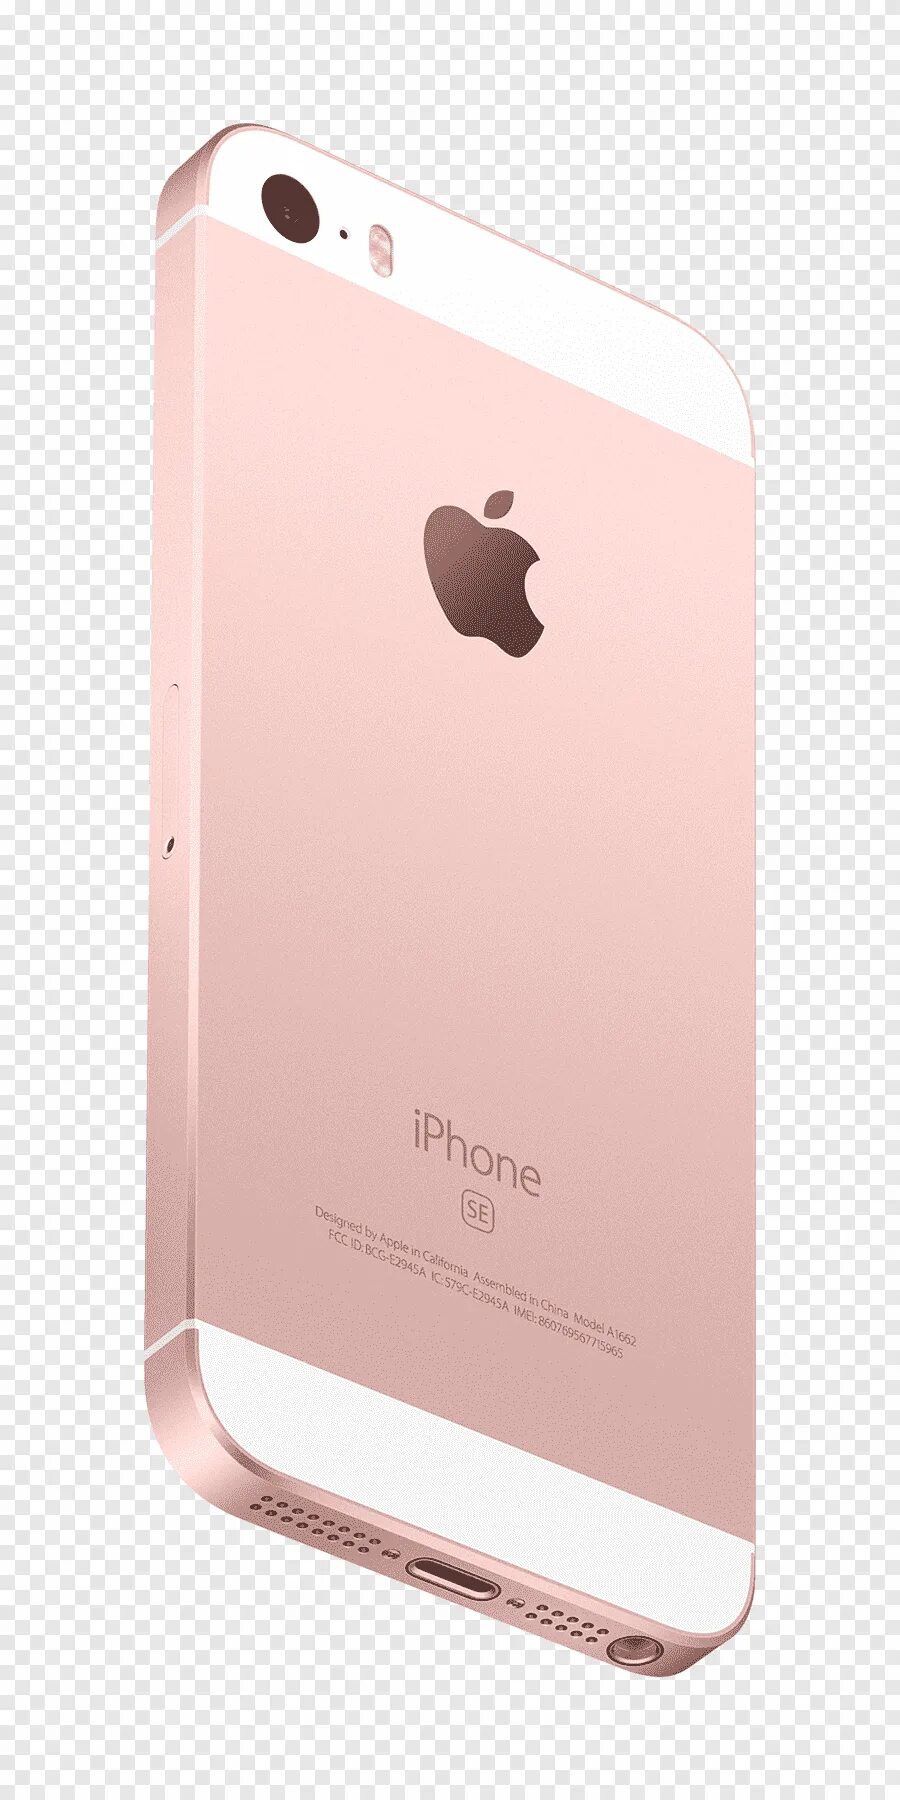 Телефон айфон яблоко. Apple iphone 5s розовое золото. Iphone 5se Gold. Айфон 5 se розовый. Apple iphone se 32gb Rose Gold.